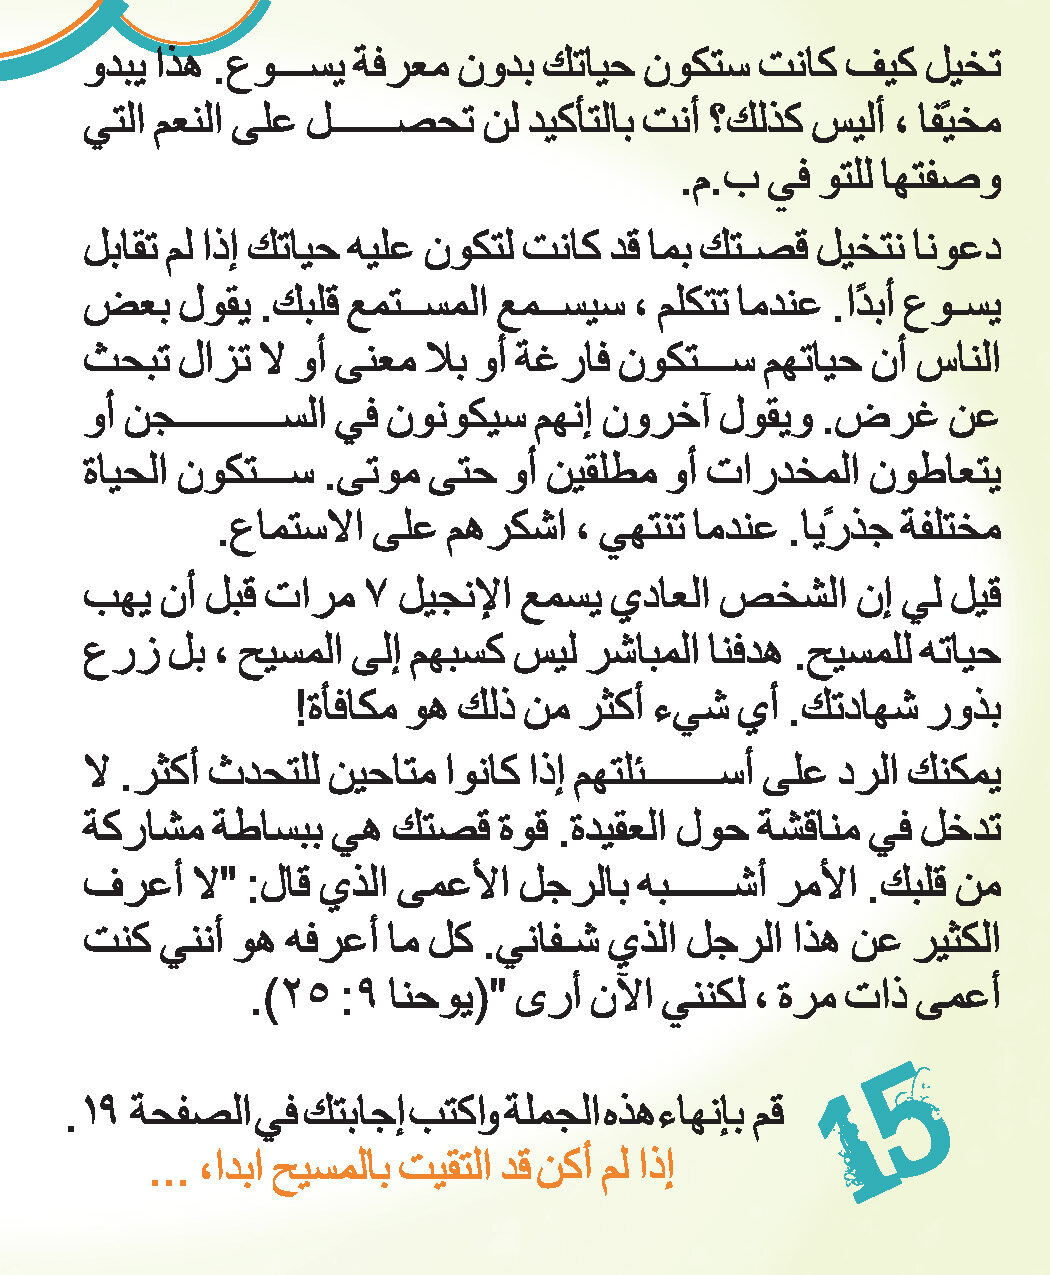 Arabic_Zubi_CDR-based_Page_15.jpg